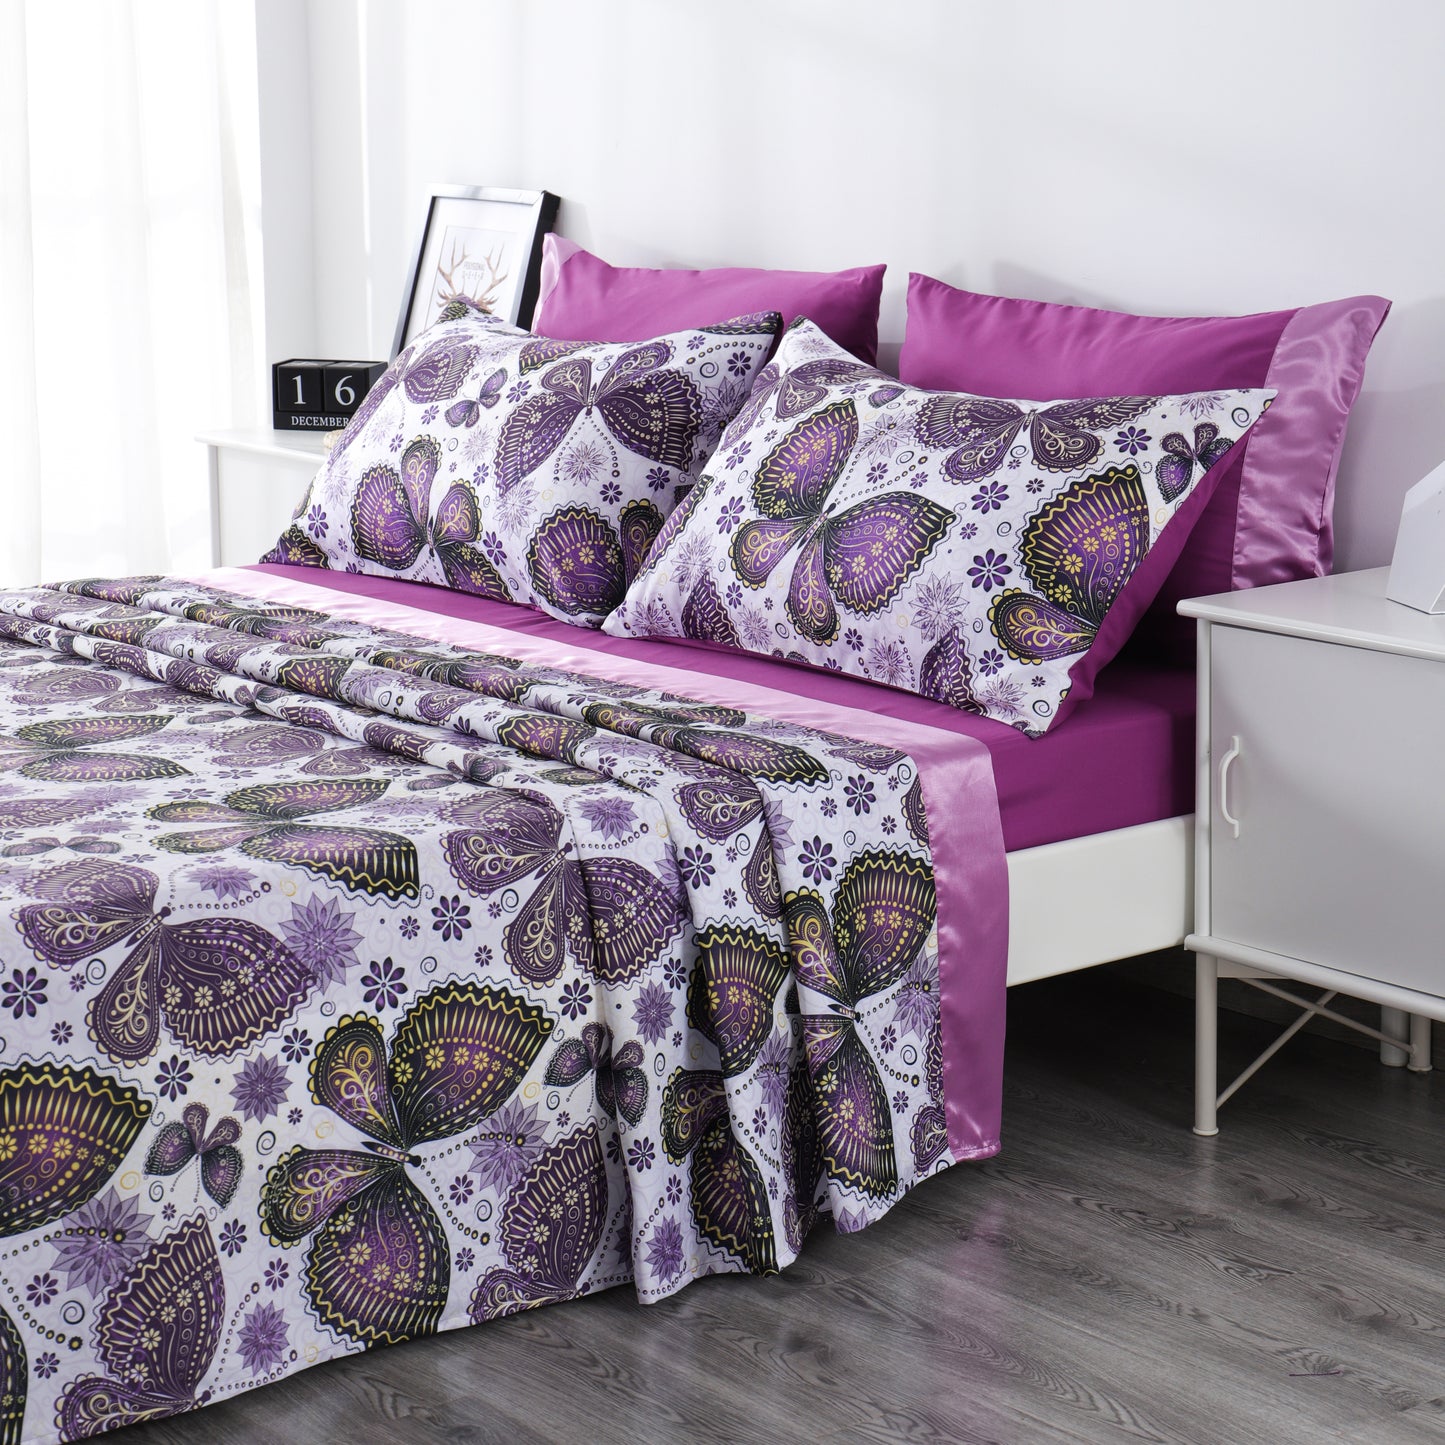 6 Piece Bed Sheet set-Butterfly